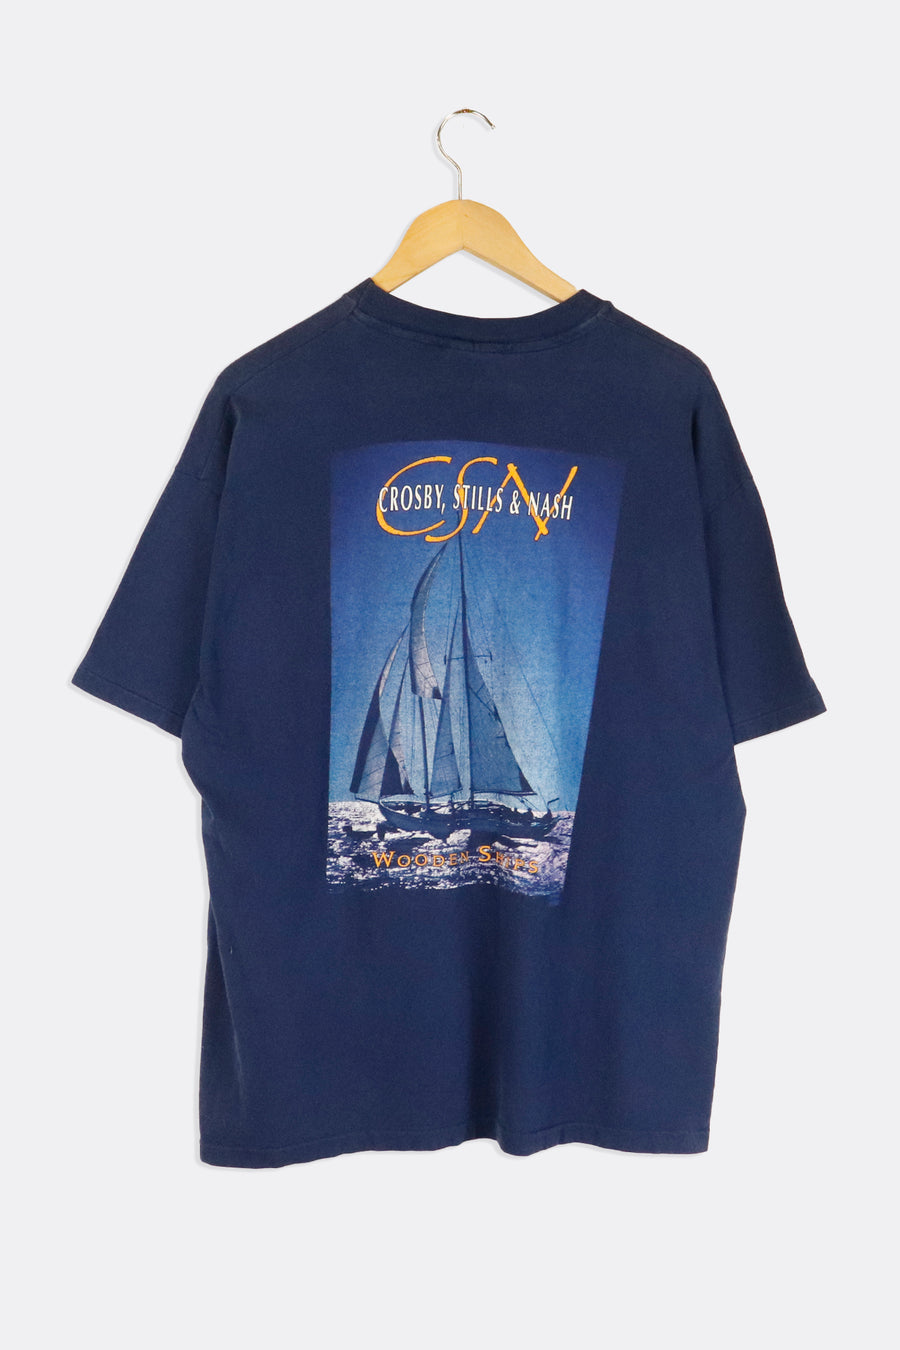 Vintage Crosby Stills And Nash Wooden Ships Album Cover And Lyrics T Shirt Sz XL